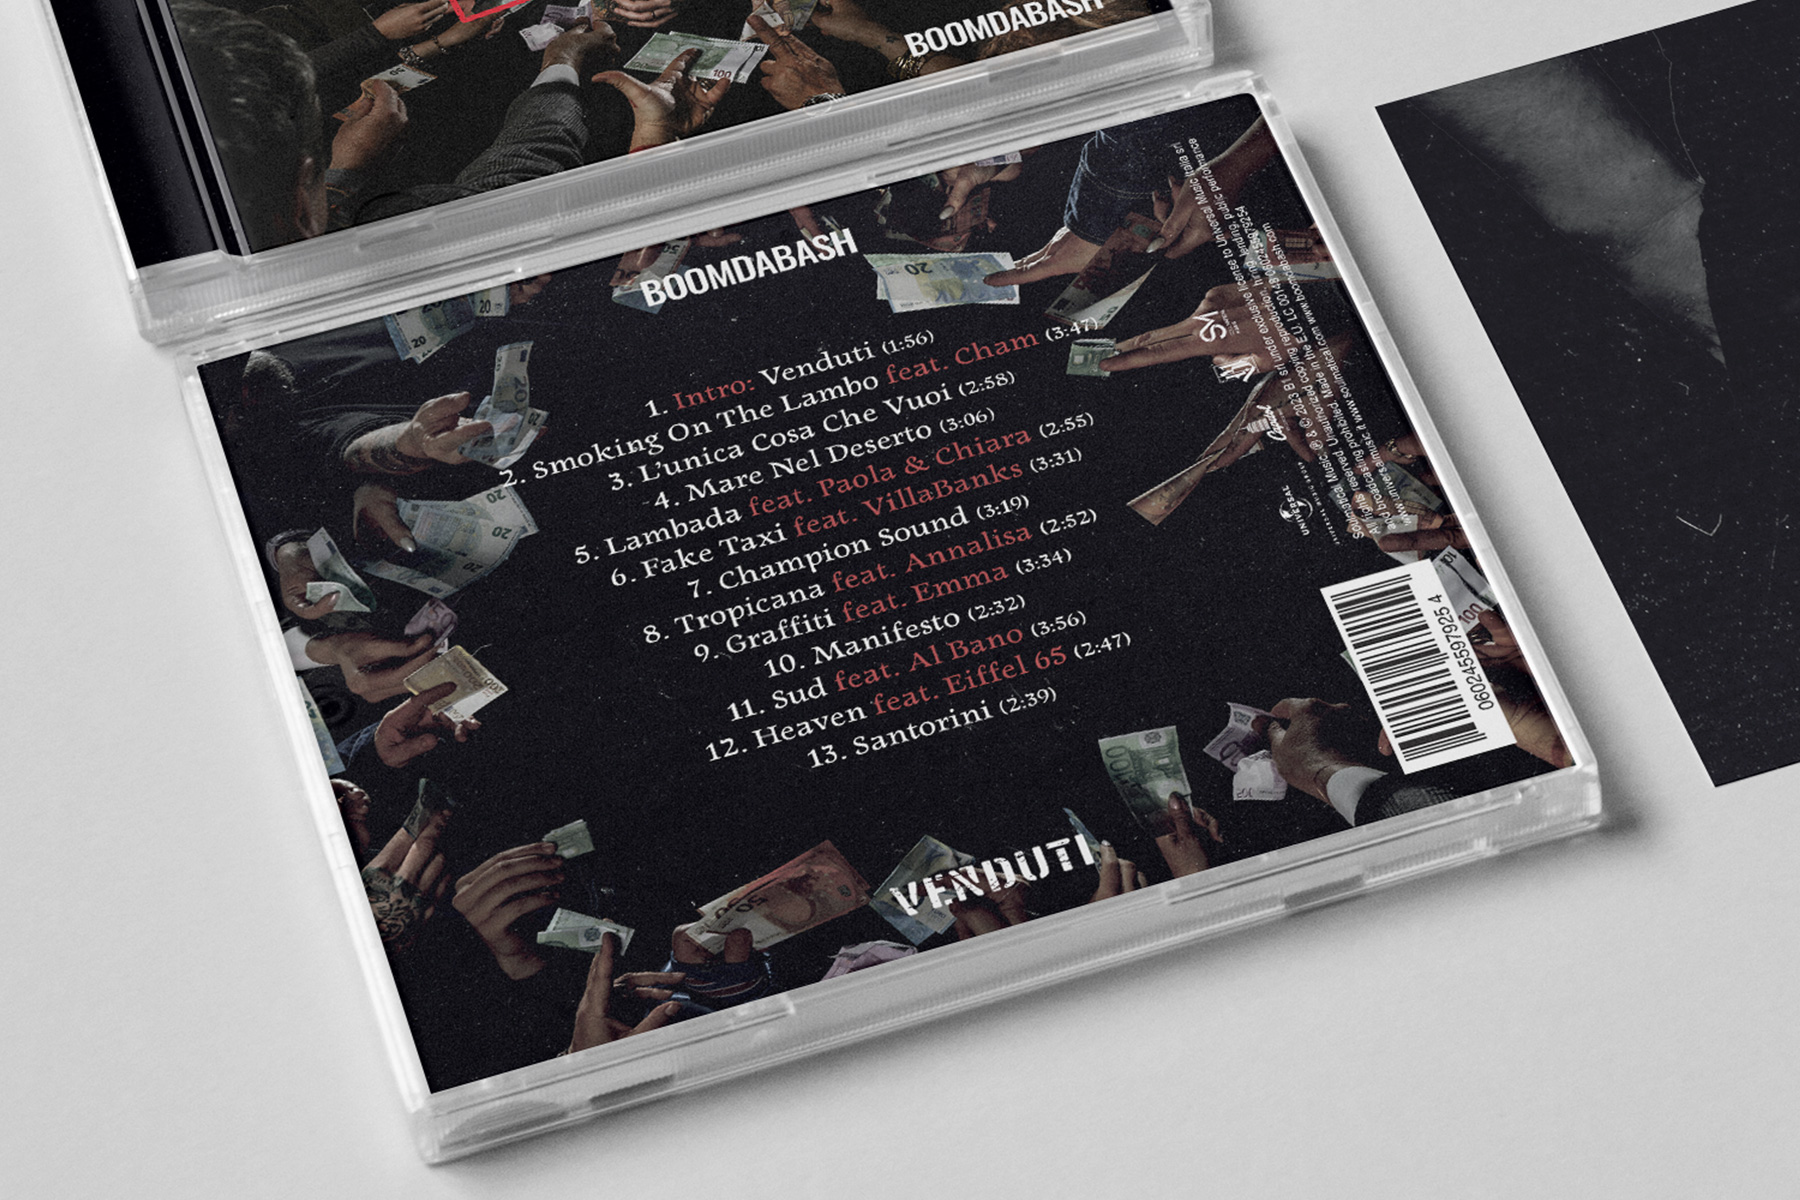 Boomdabash “Venduti” – CD/Vinyl Pack - img 6